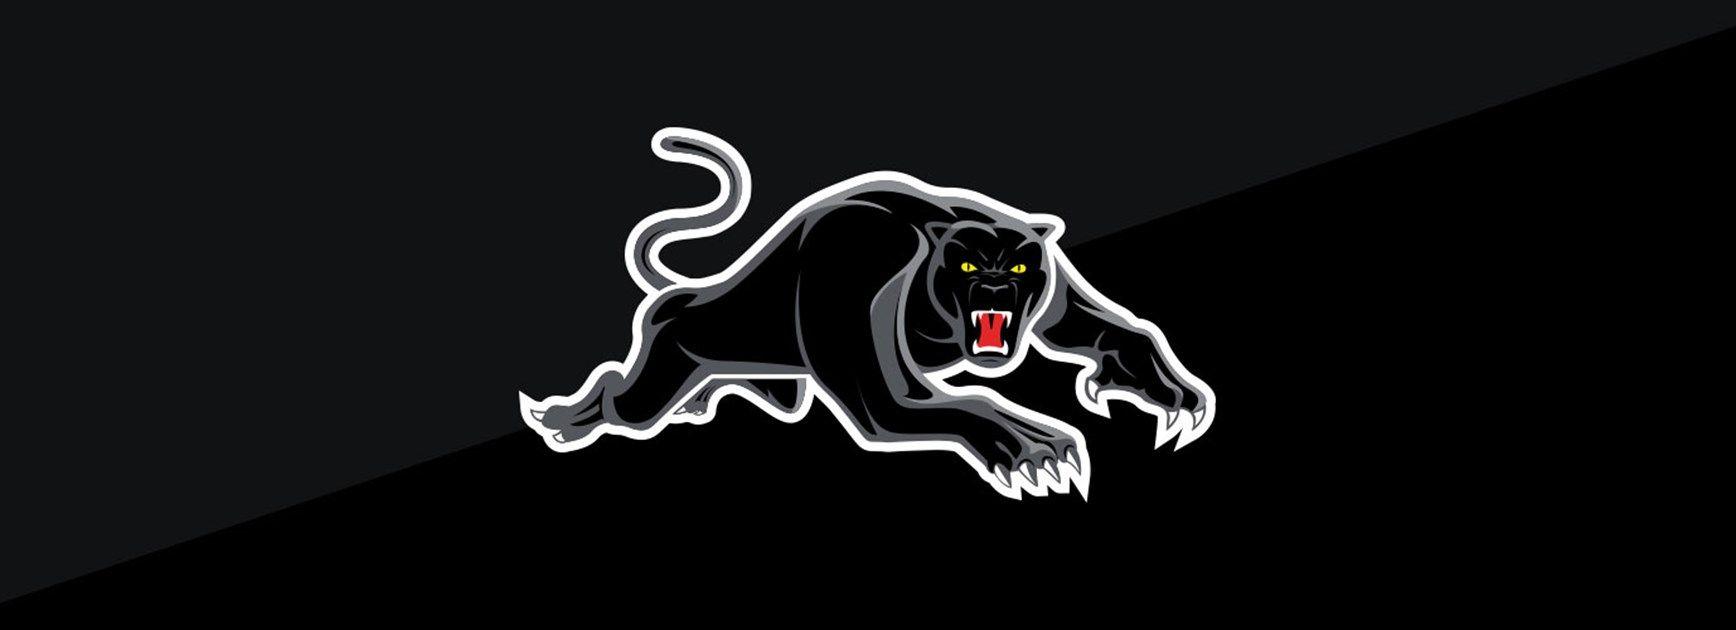 Pathers Logo - Panthers reveals renewed logos for 2019 - Panthers